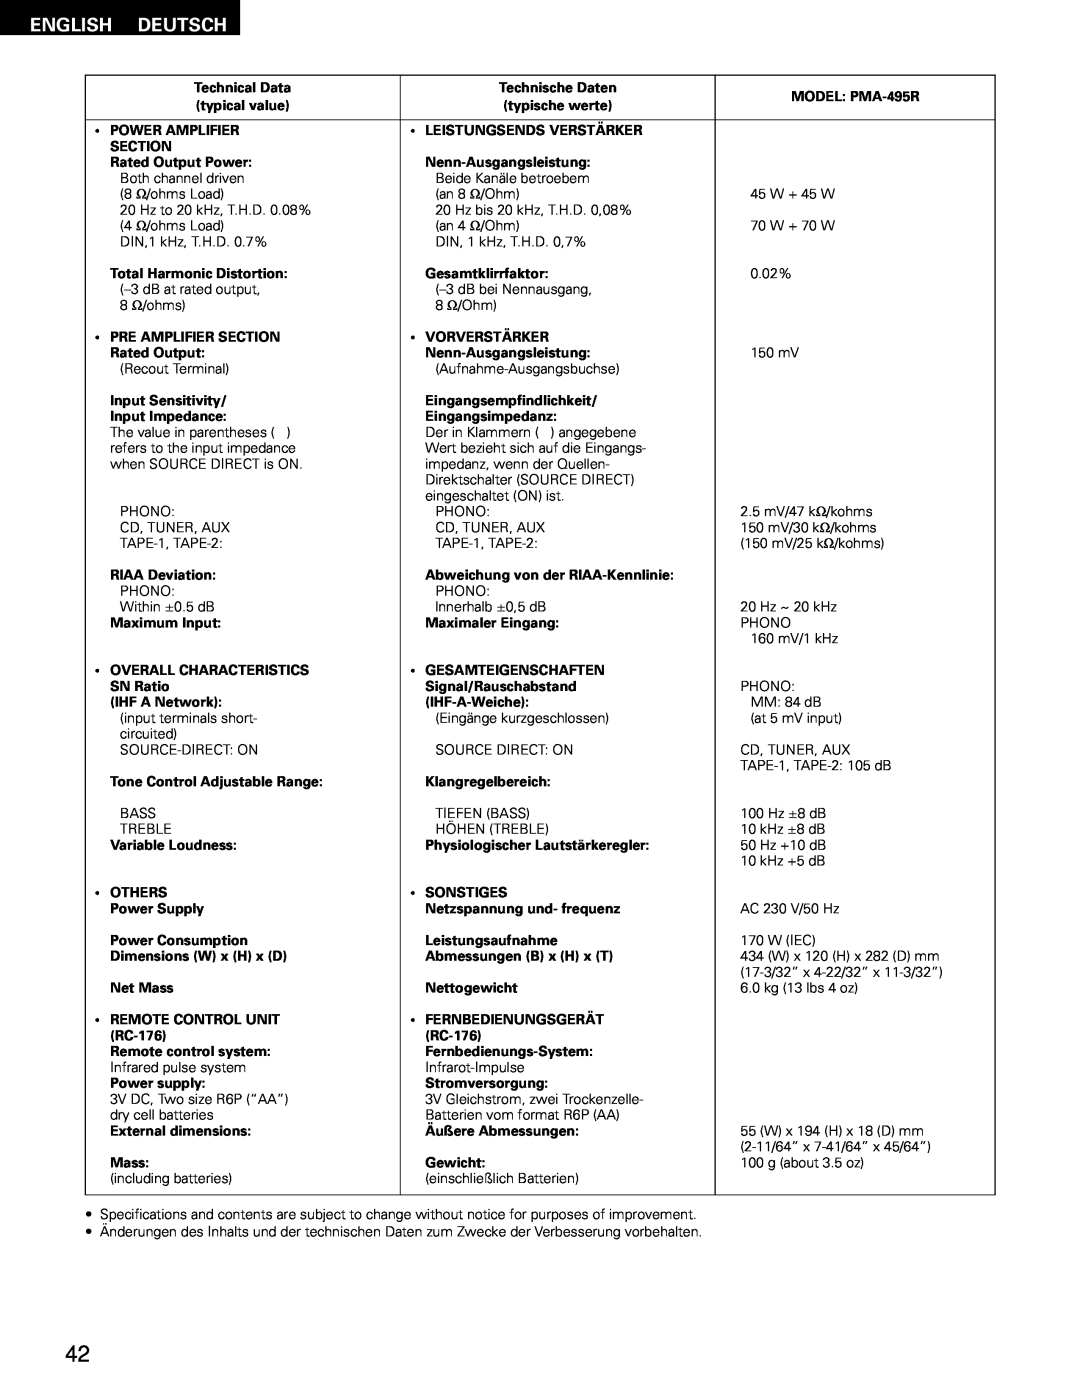 Denon manual English, Deutsch, MODEL PMA-495R, 150 mV/25 kΩ 